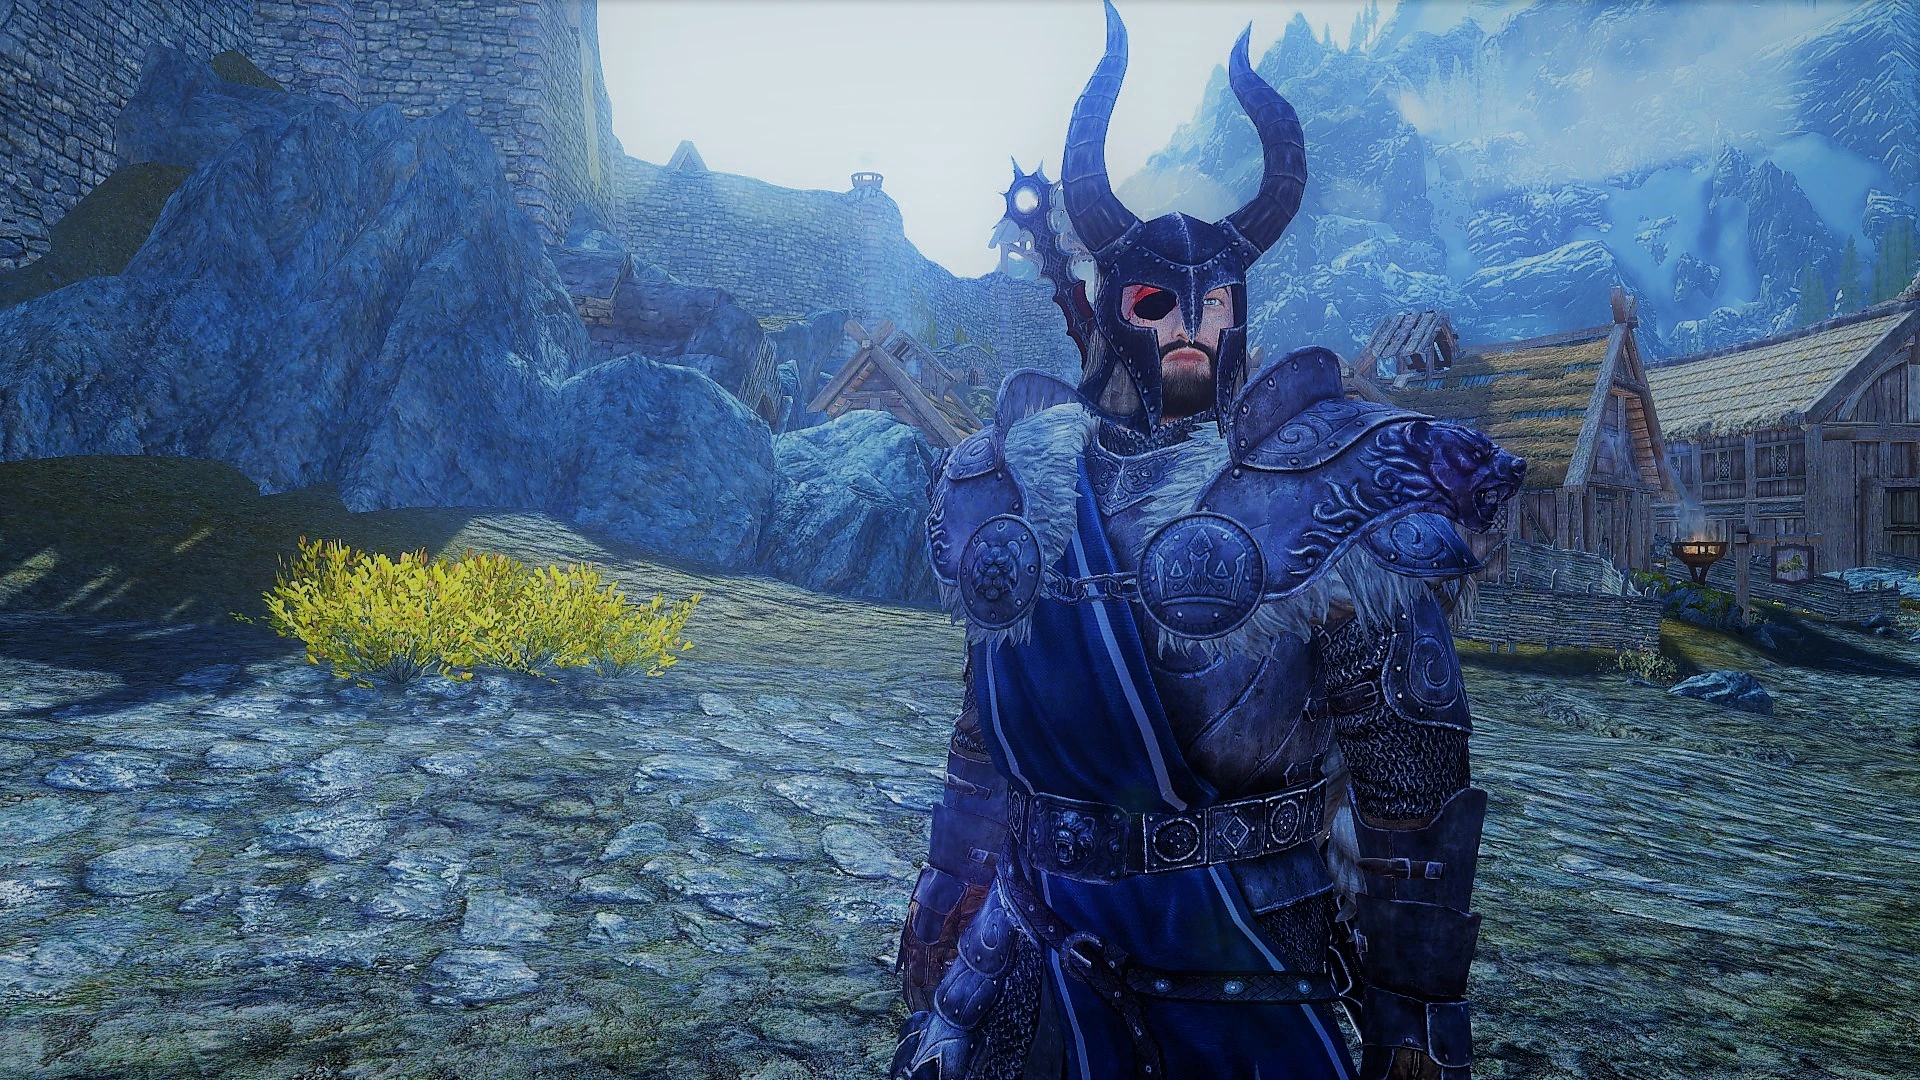 skyrim old kingdom armor overhaul nexus